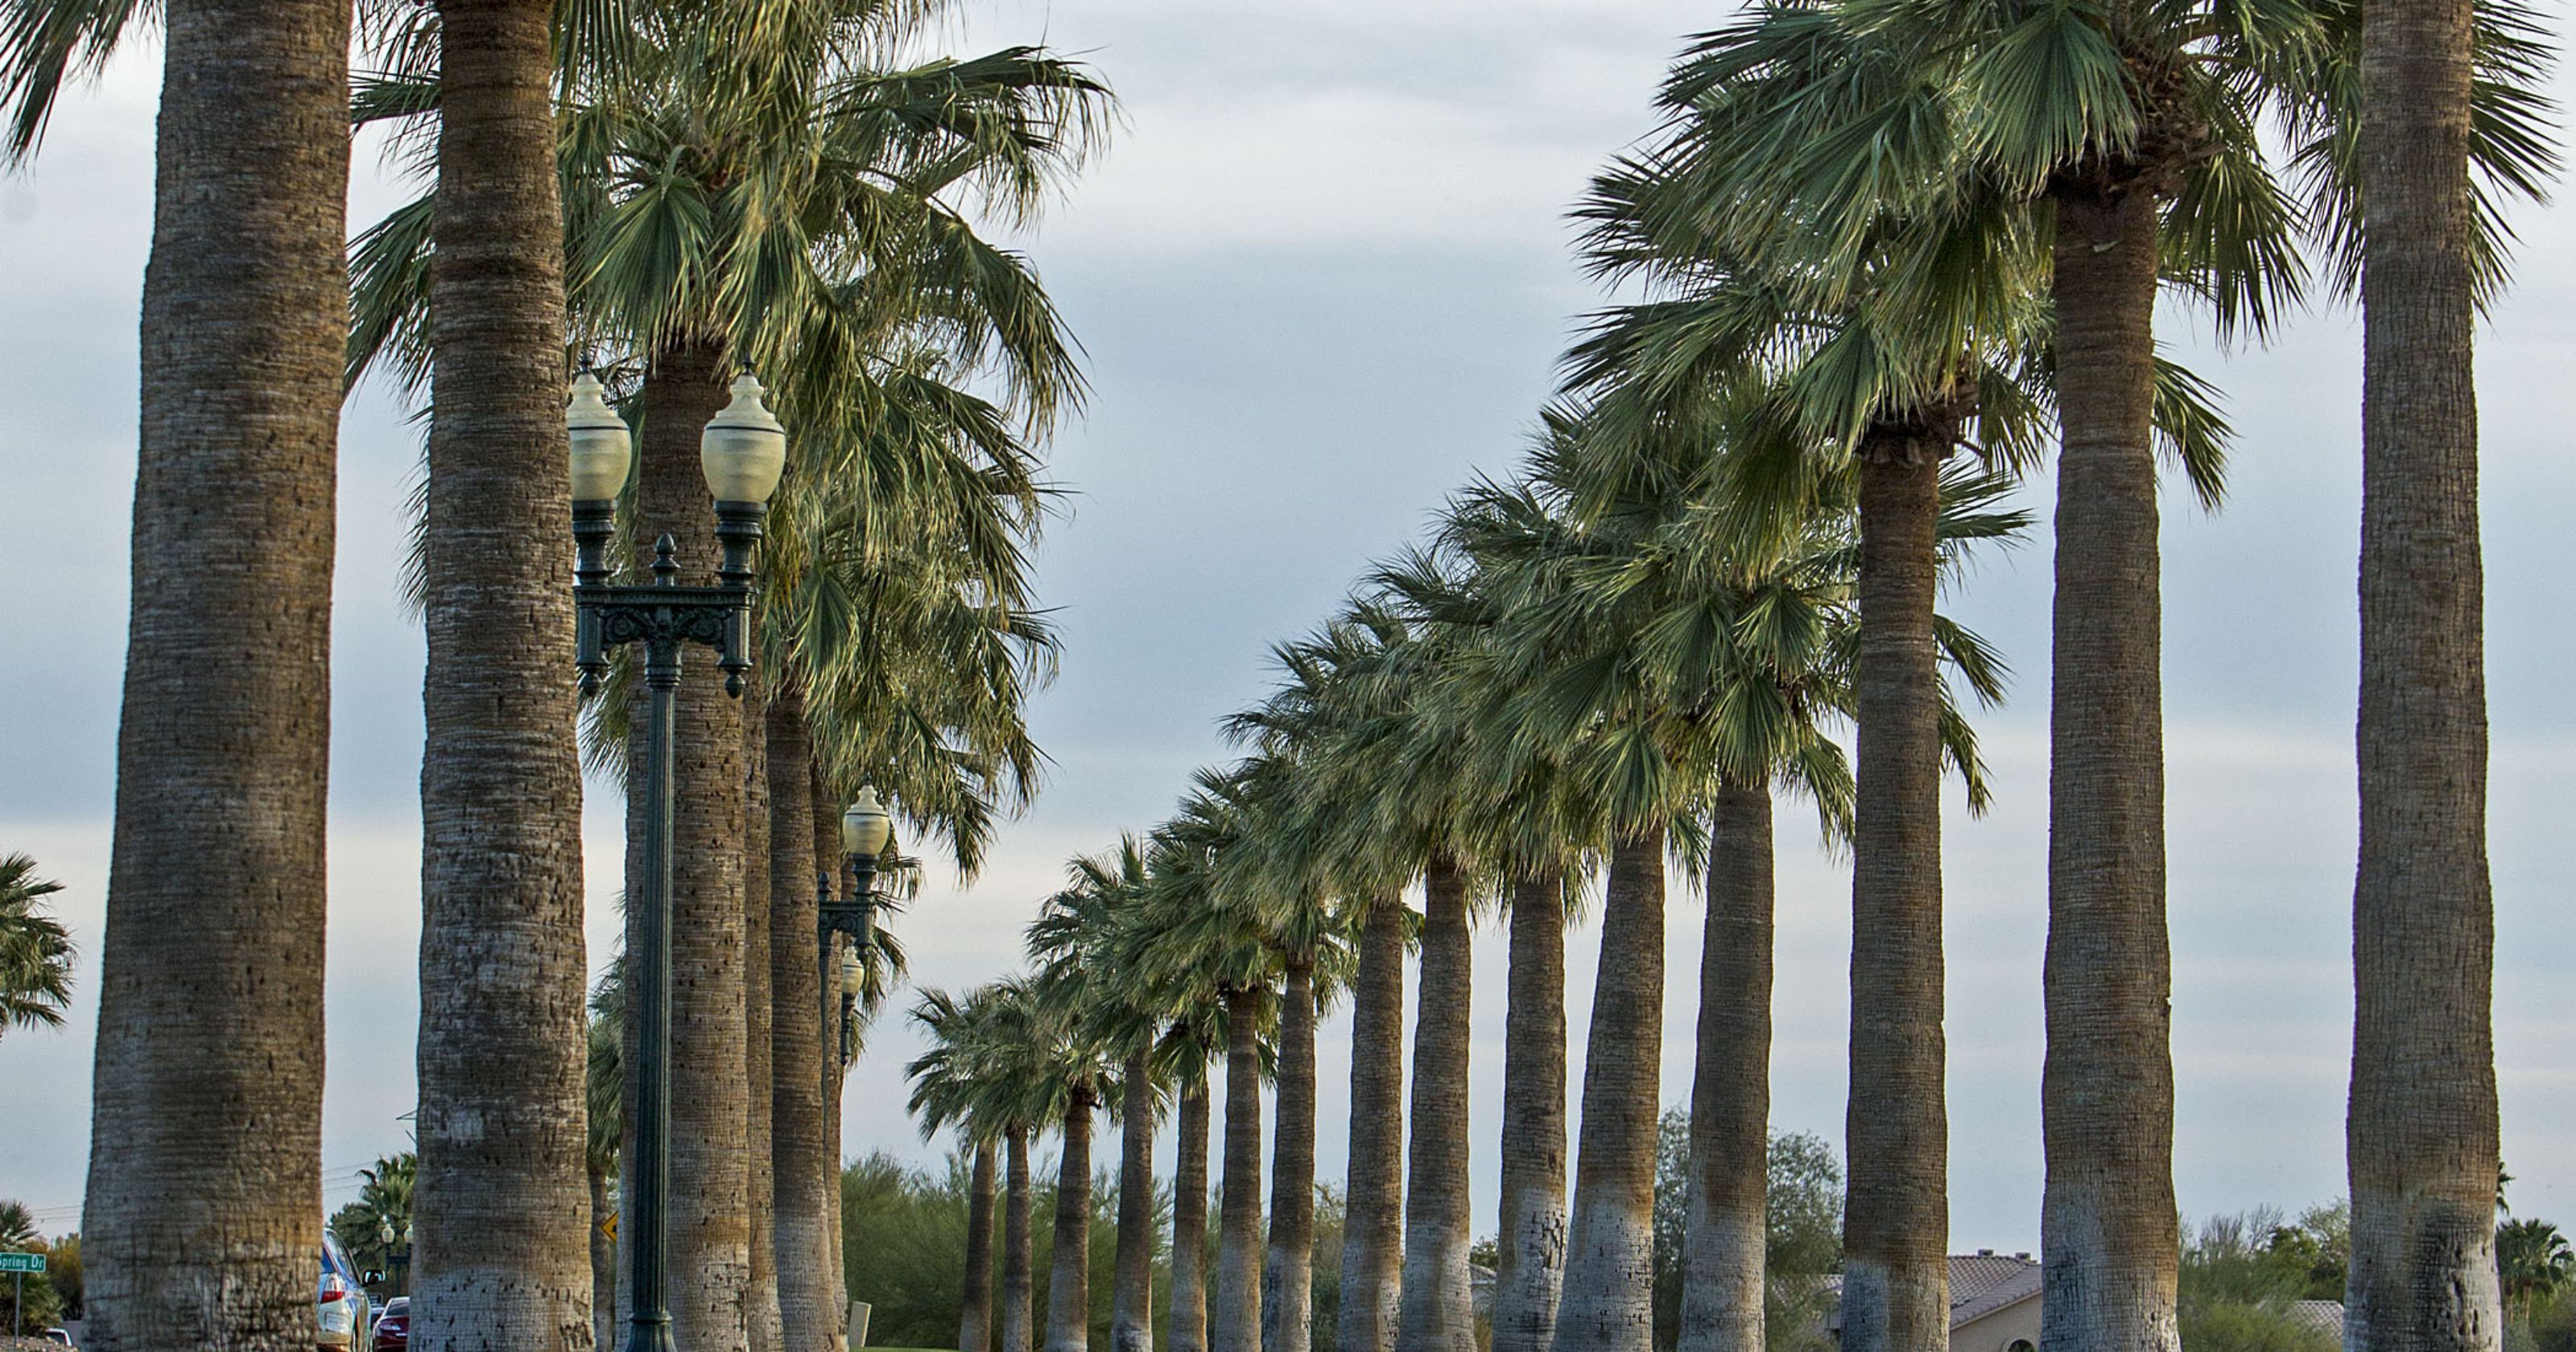 Are palm trees native to Arizona?